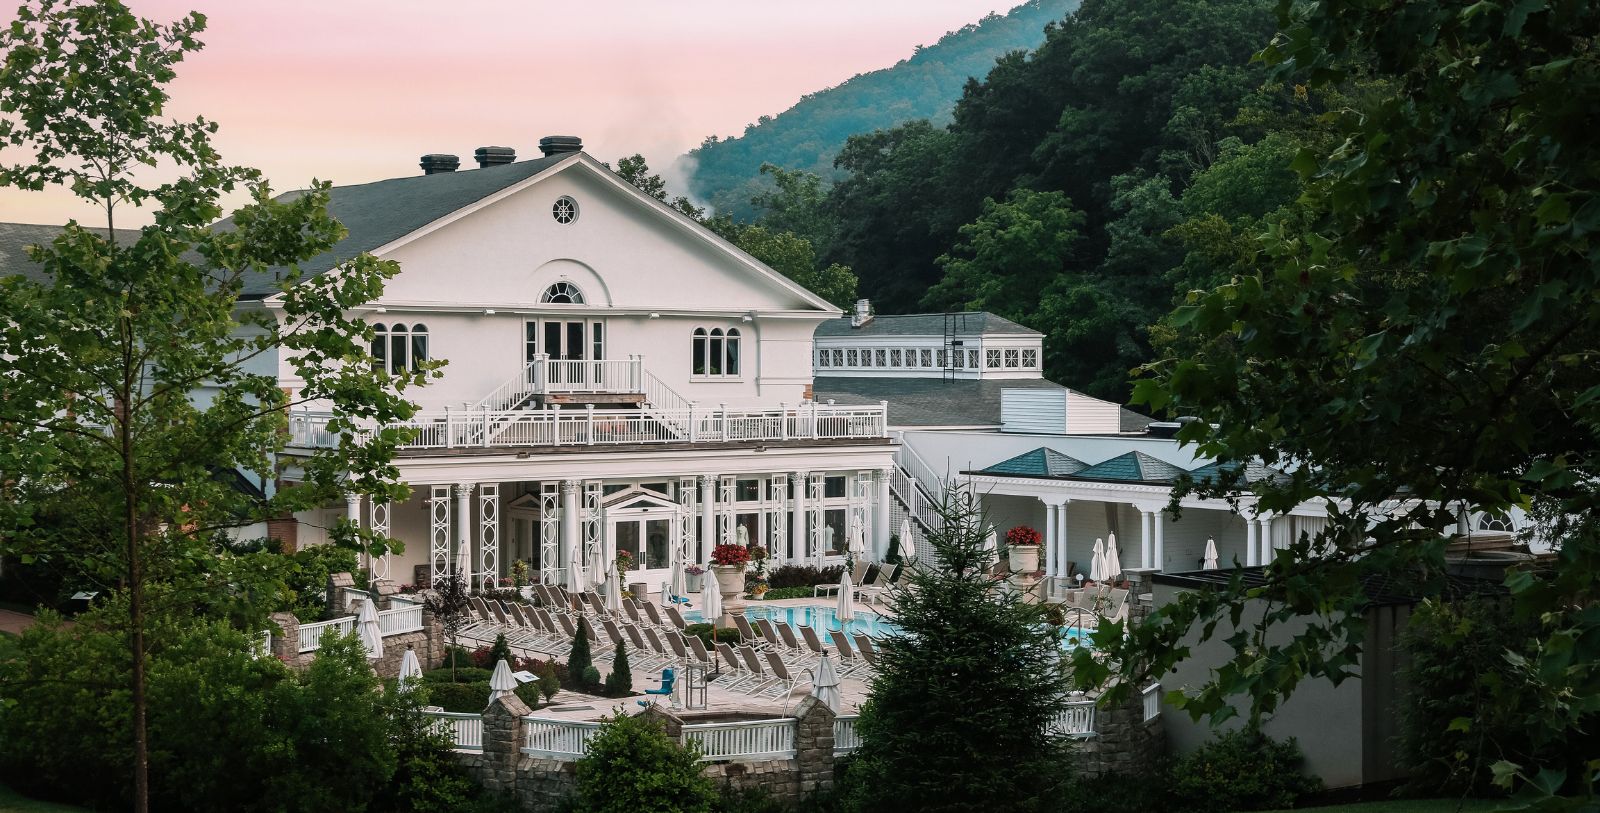 Image of Spa Omni Homestead Resort, 1766, Member of Historic Hotels of America, in Hot Springs, Virginia, Spa